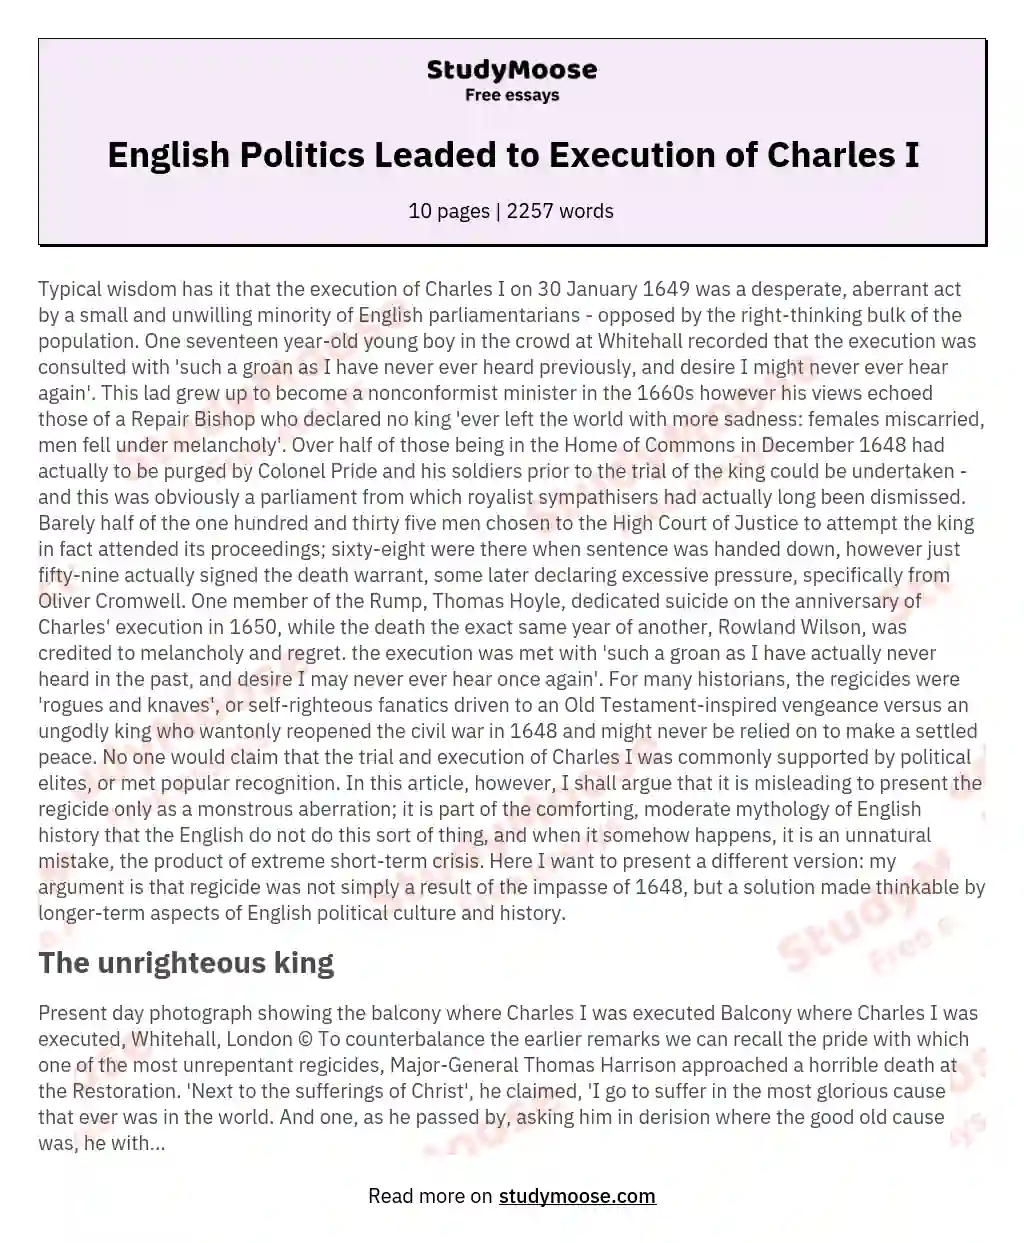 English Politics Leaded to Execution of Charles I essay